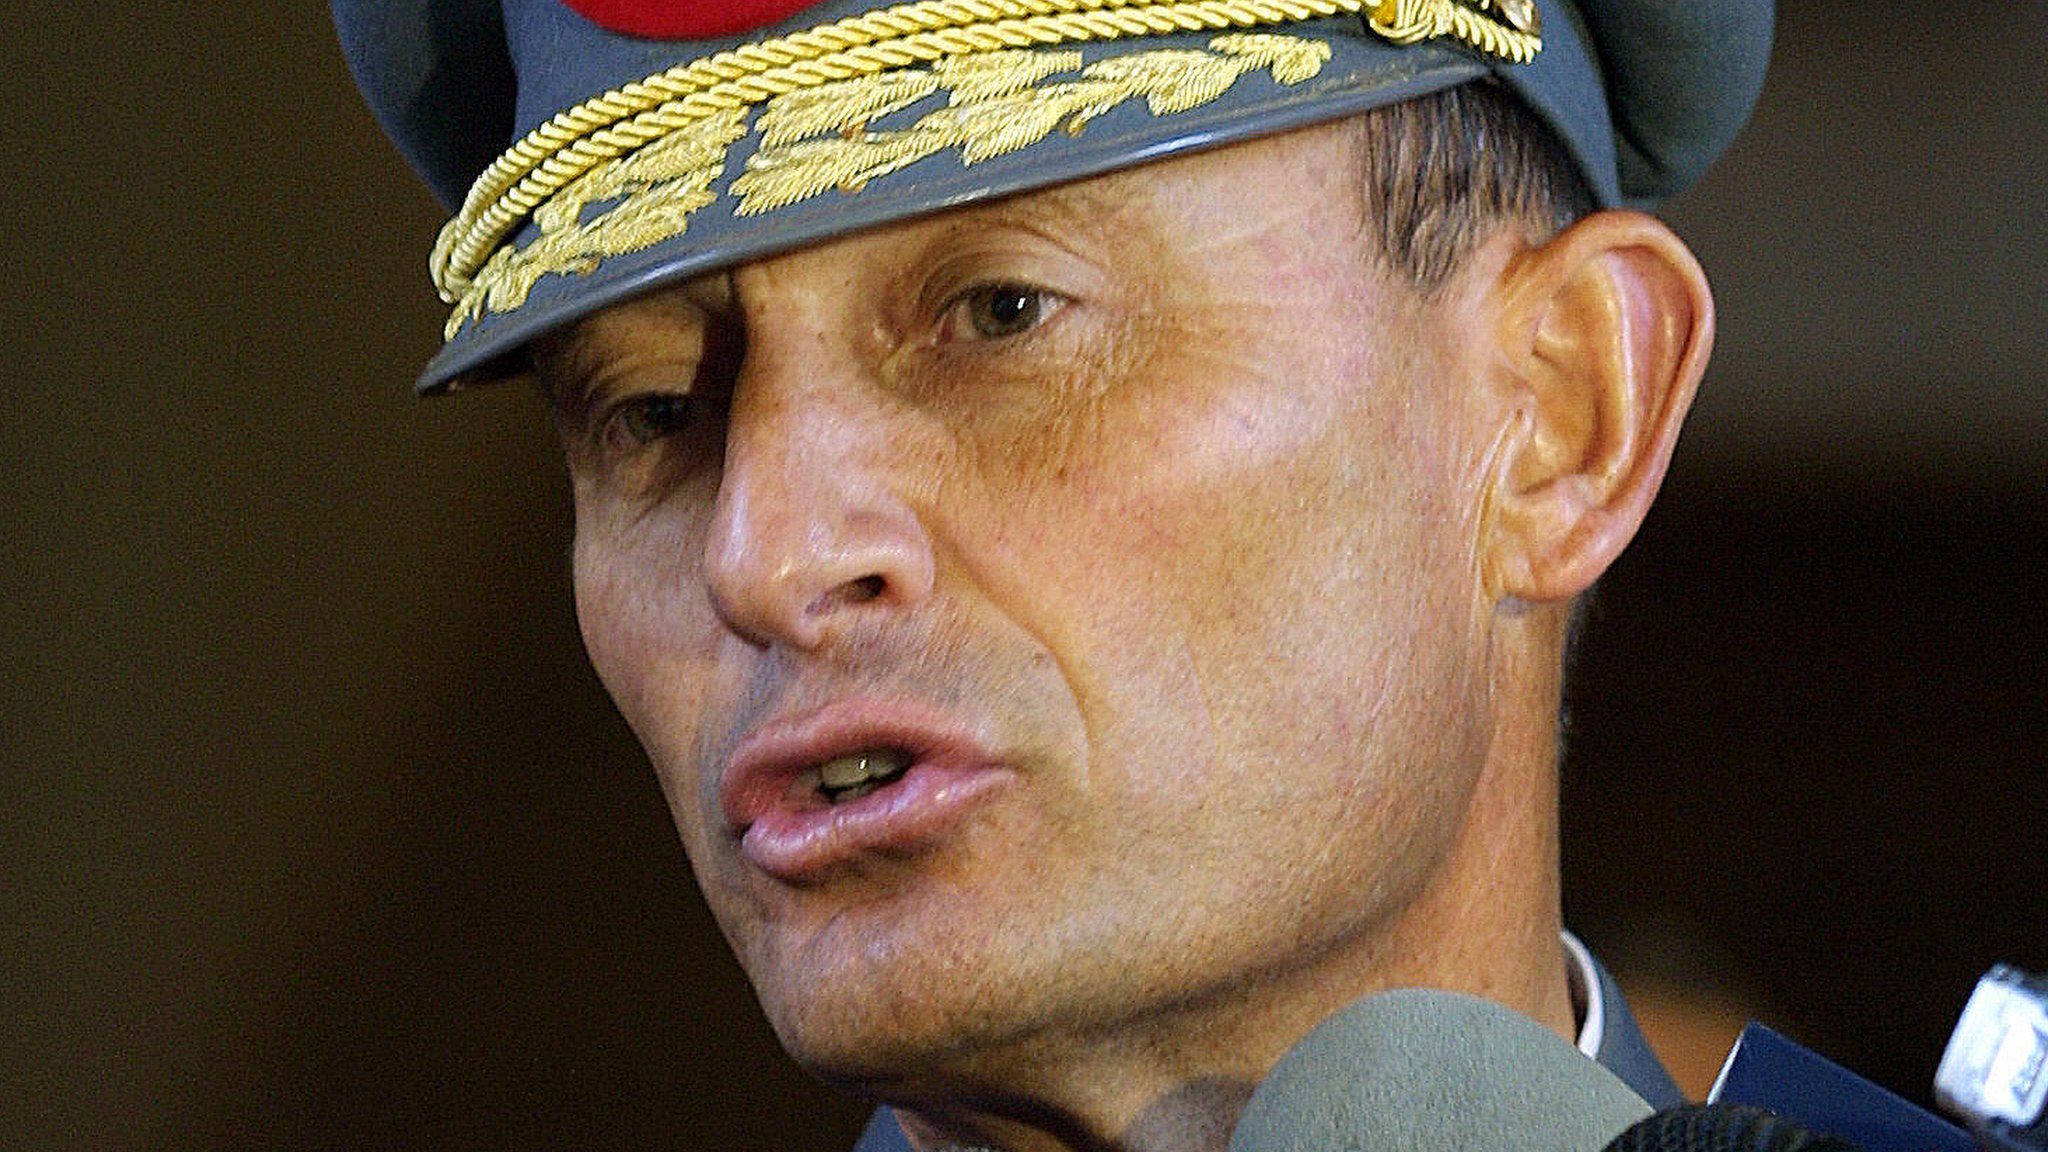 Juan Emilio Cheyre pictured in Santiago on 3 March 2004